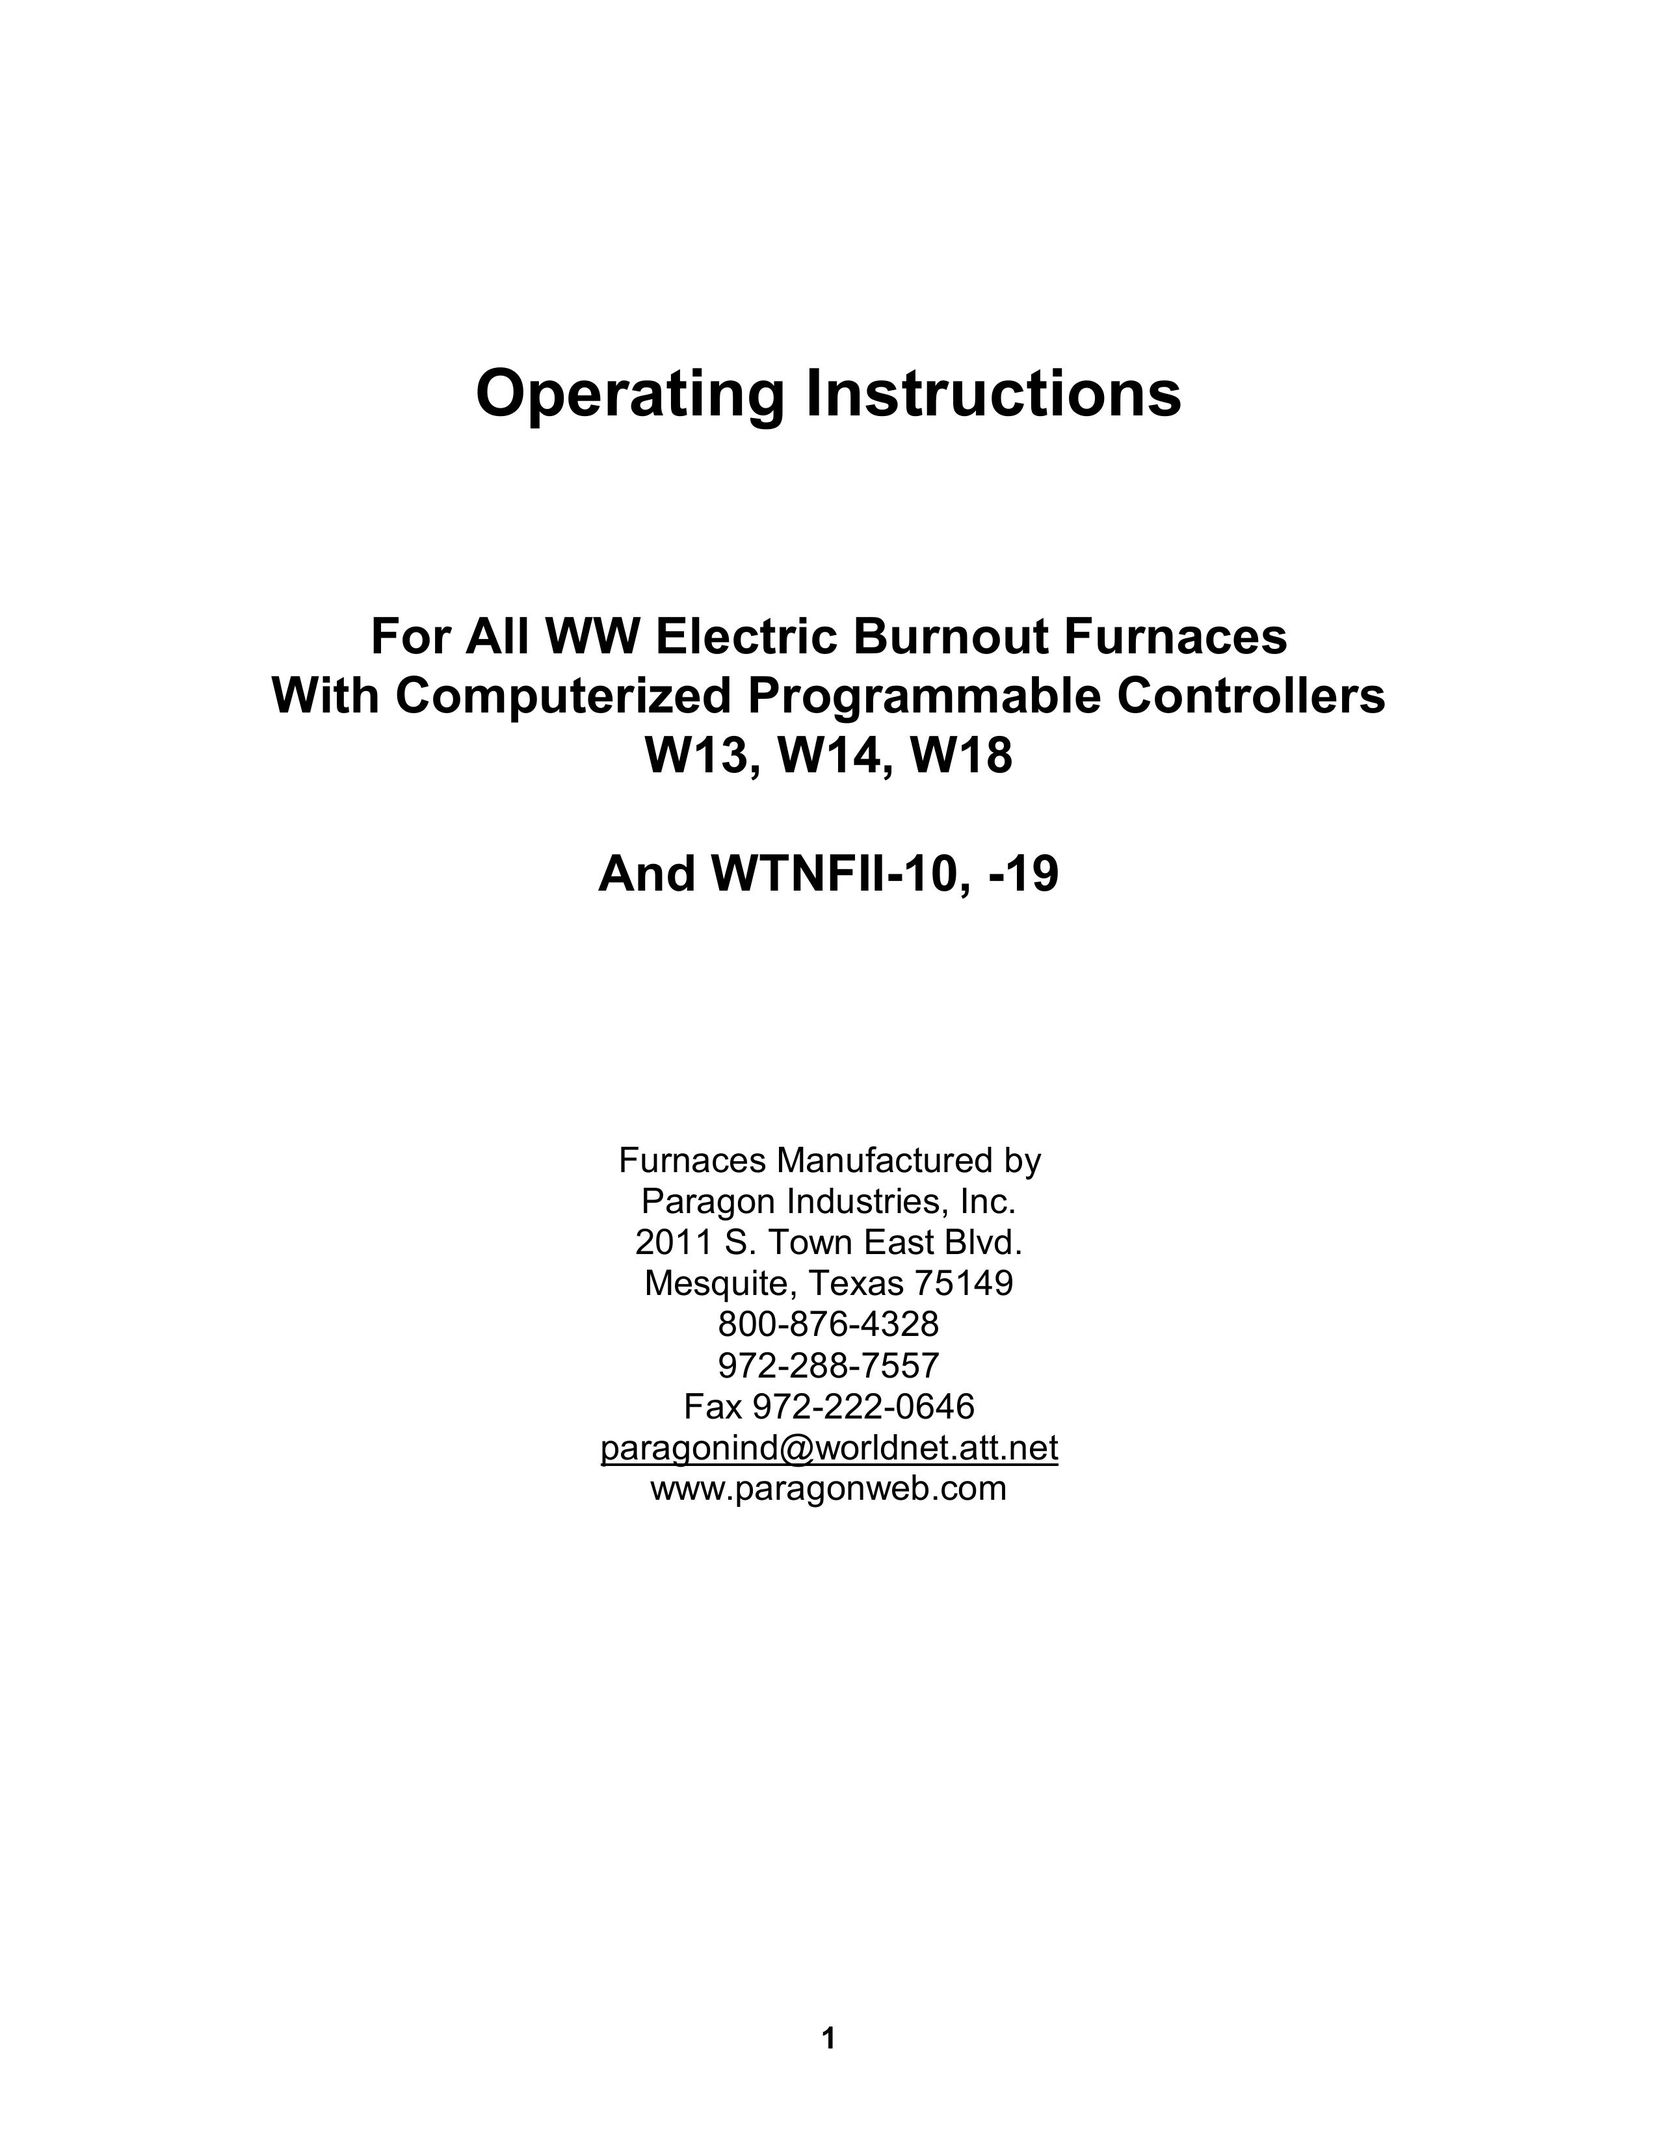 Paragon W14 Furnace User Manual